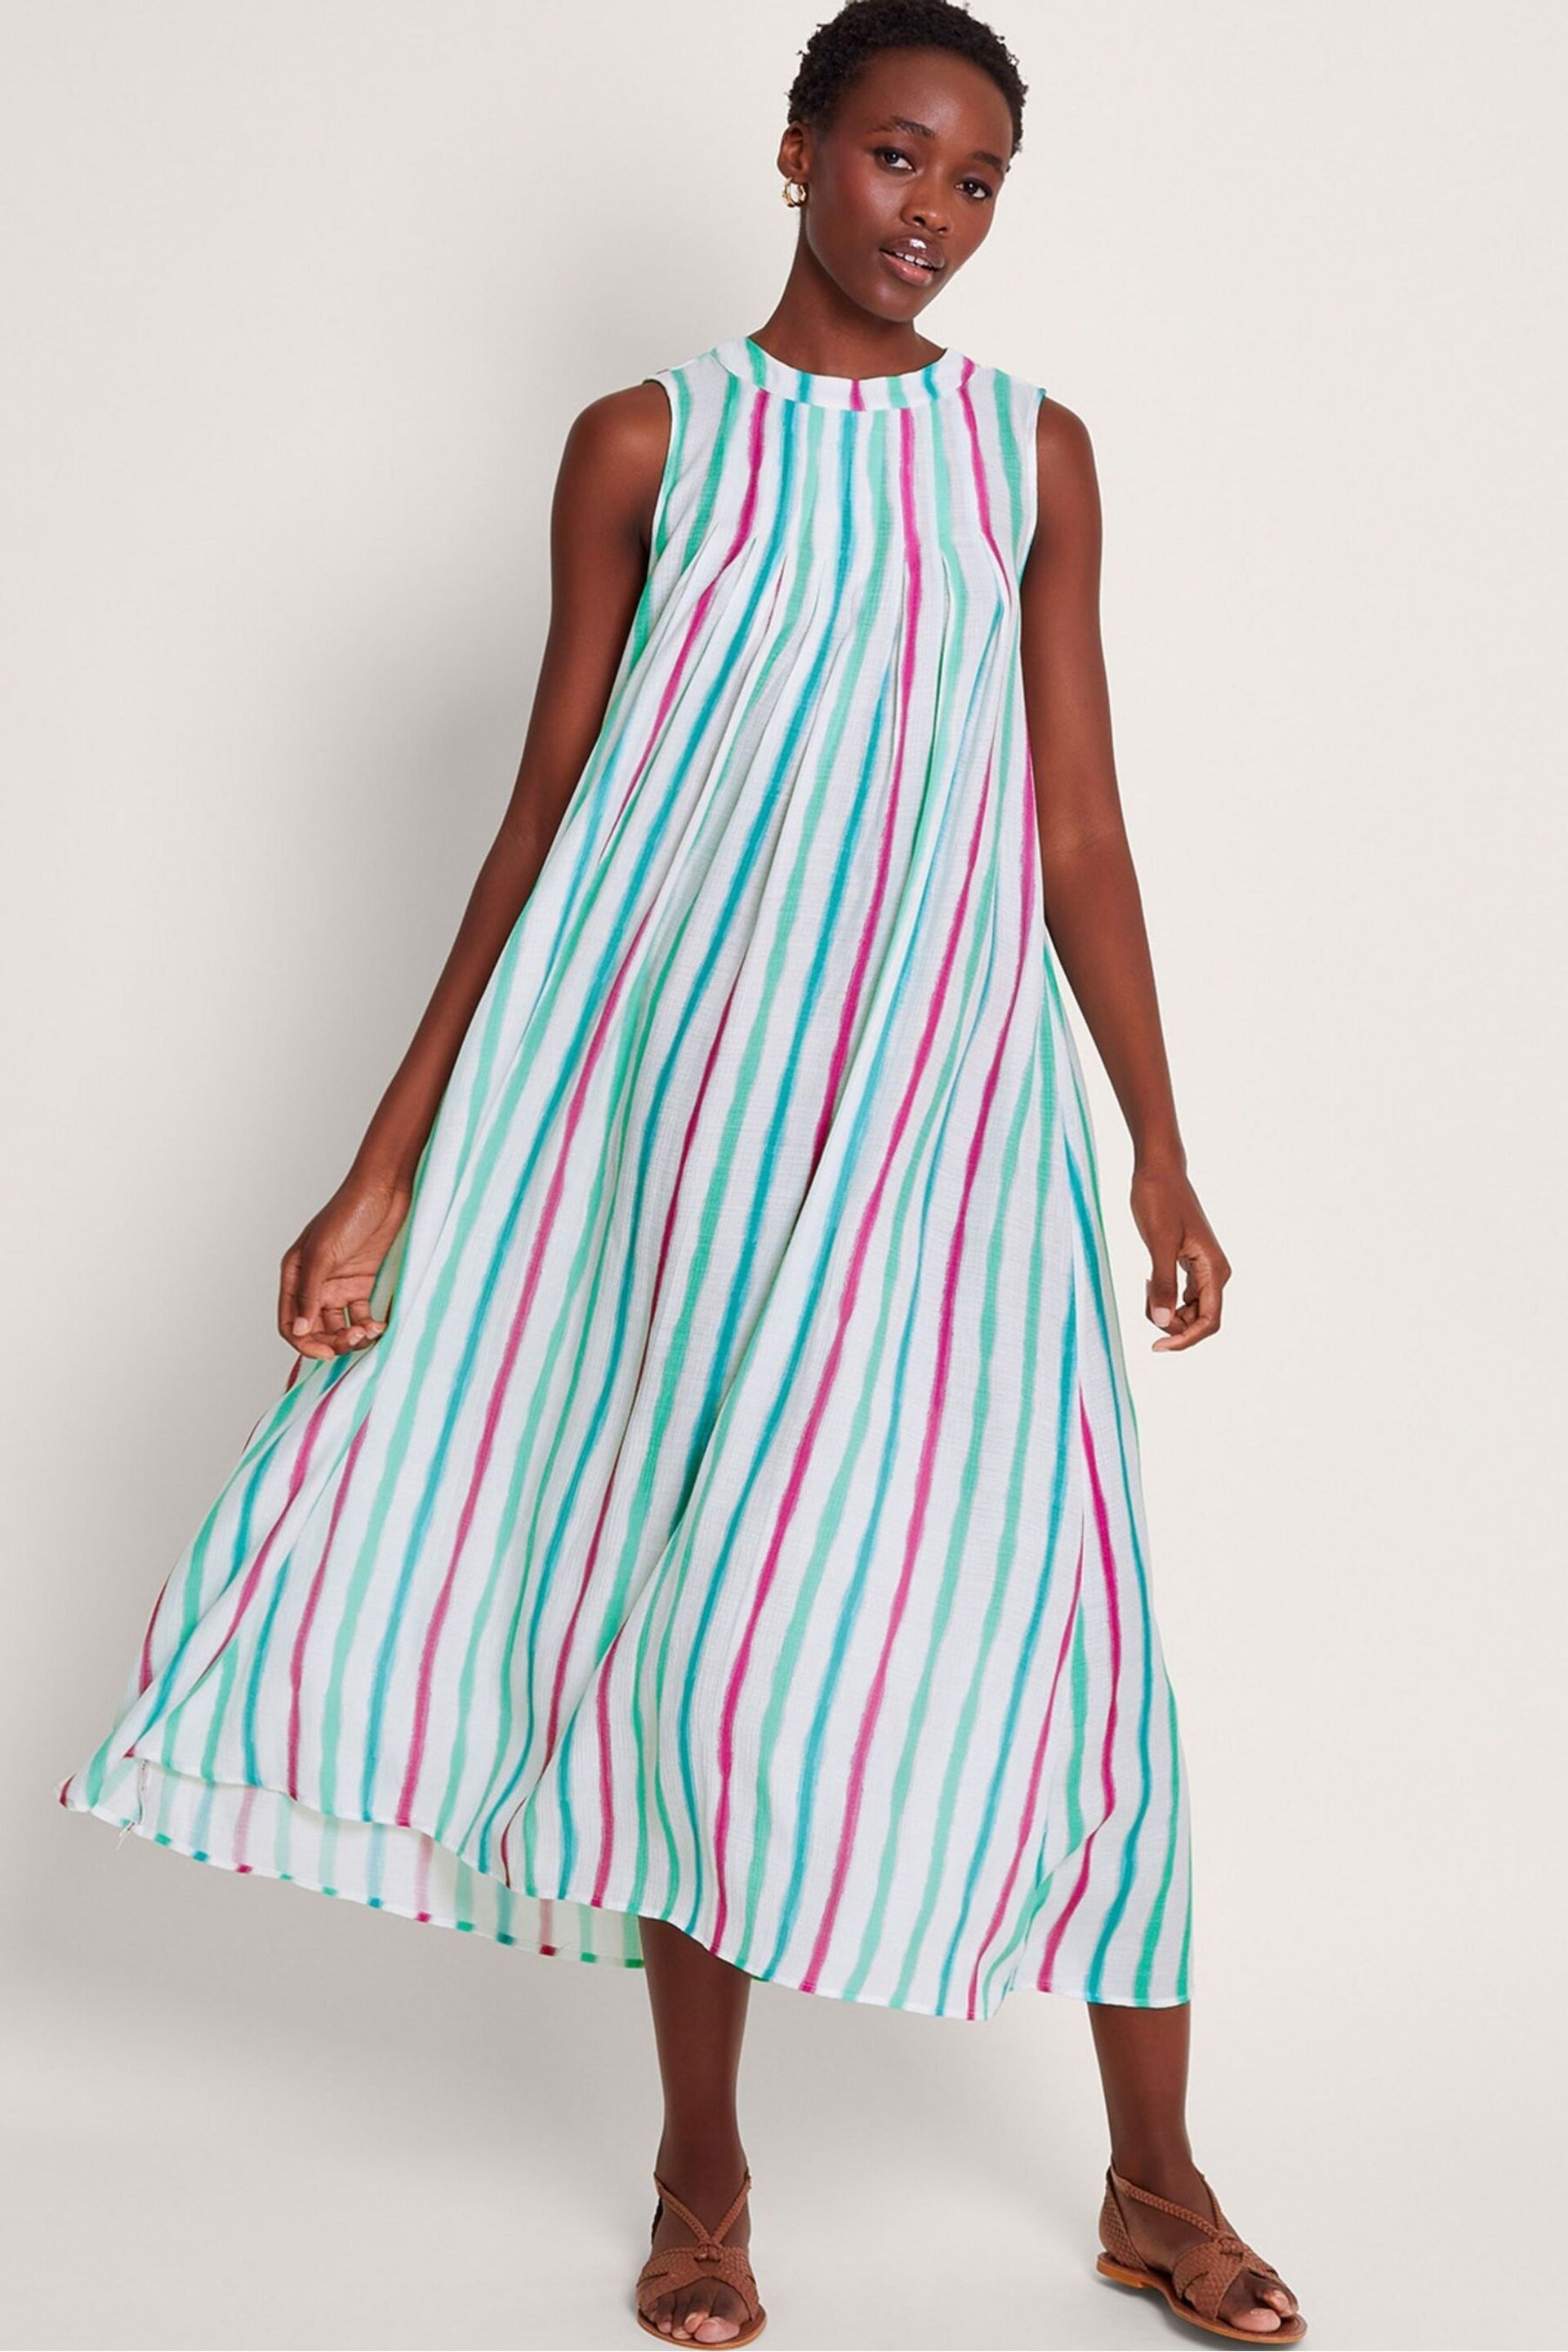 Monsoon Natural Sally Stripe Dress - Image 1 of 5